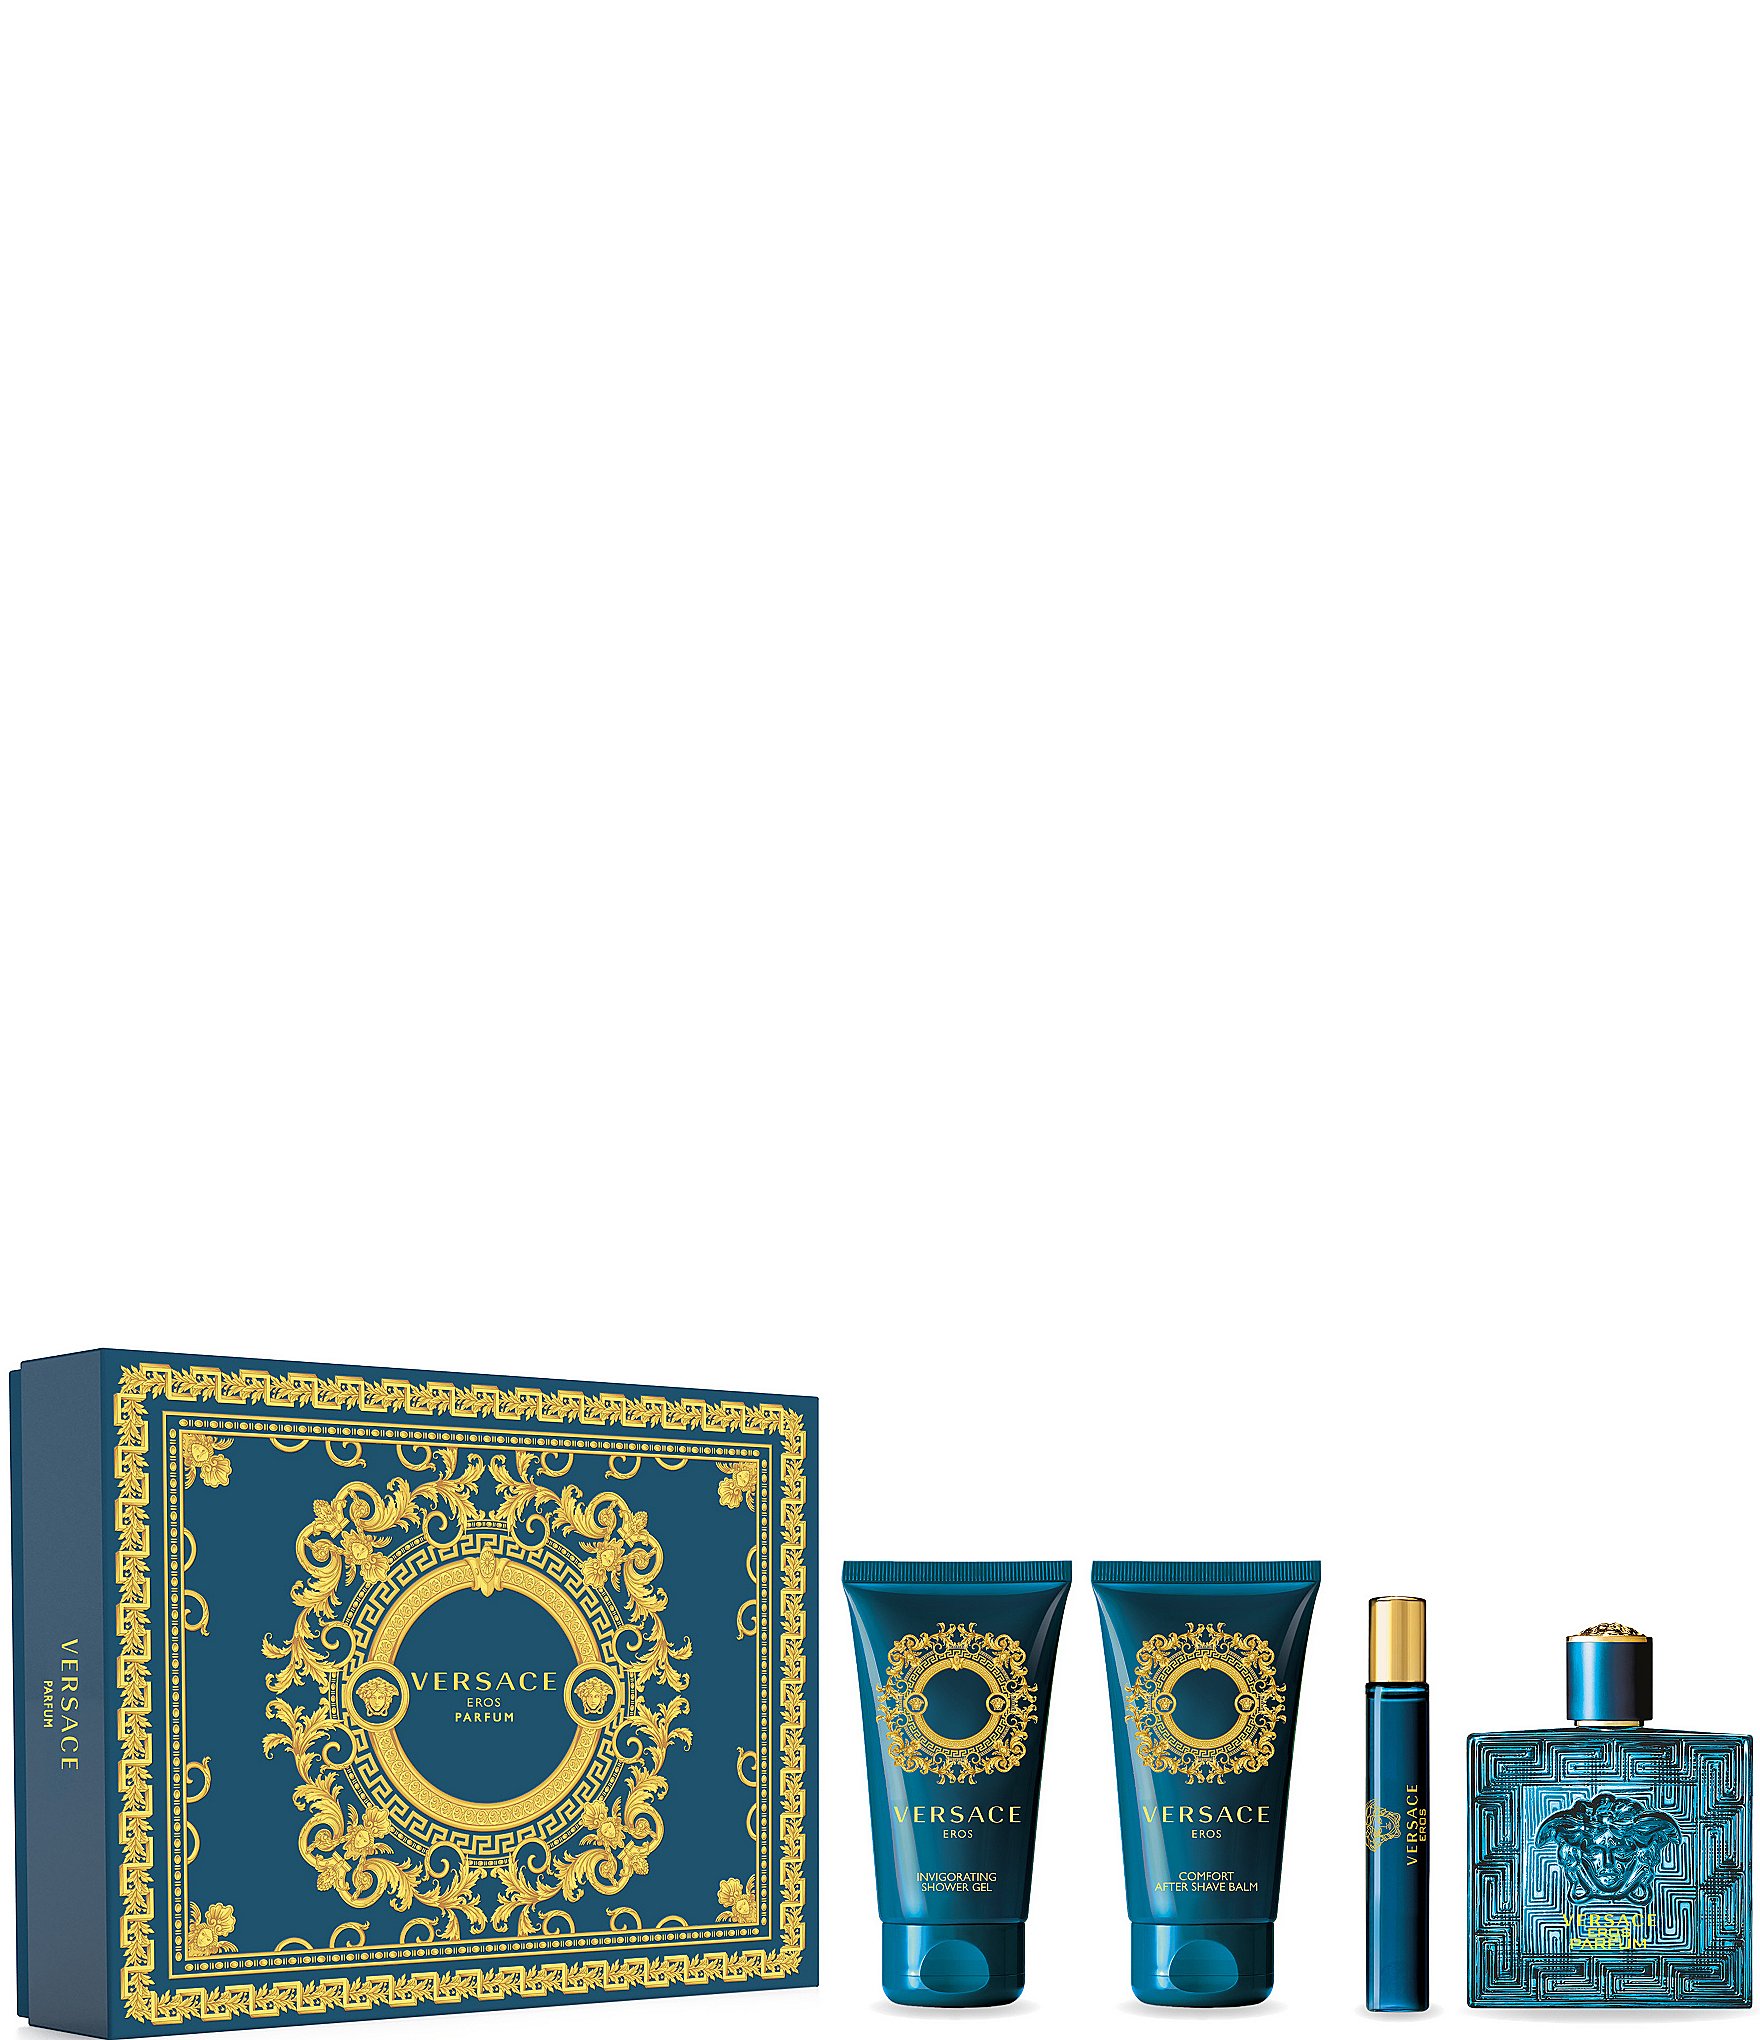 Versace Eros Parfum Fall Gift Set | Dillard's